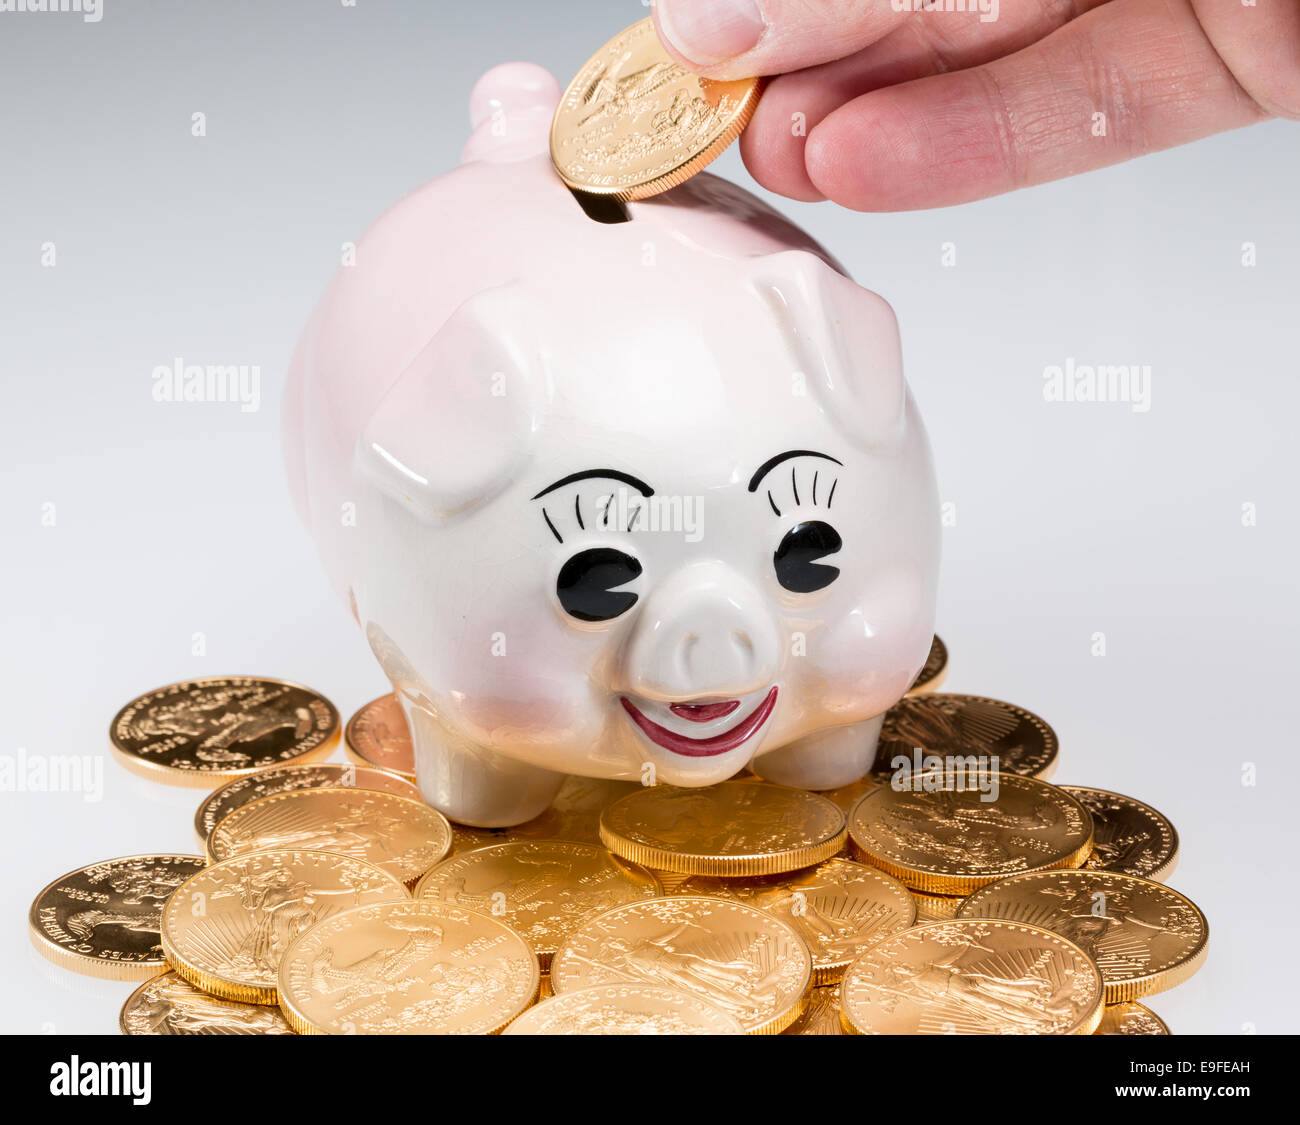 Hand placing gold coin into piggy bank Stock Photo